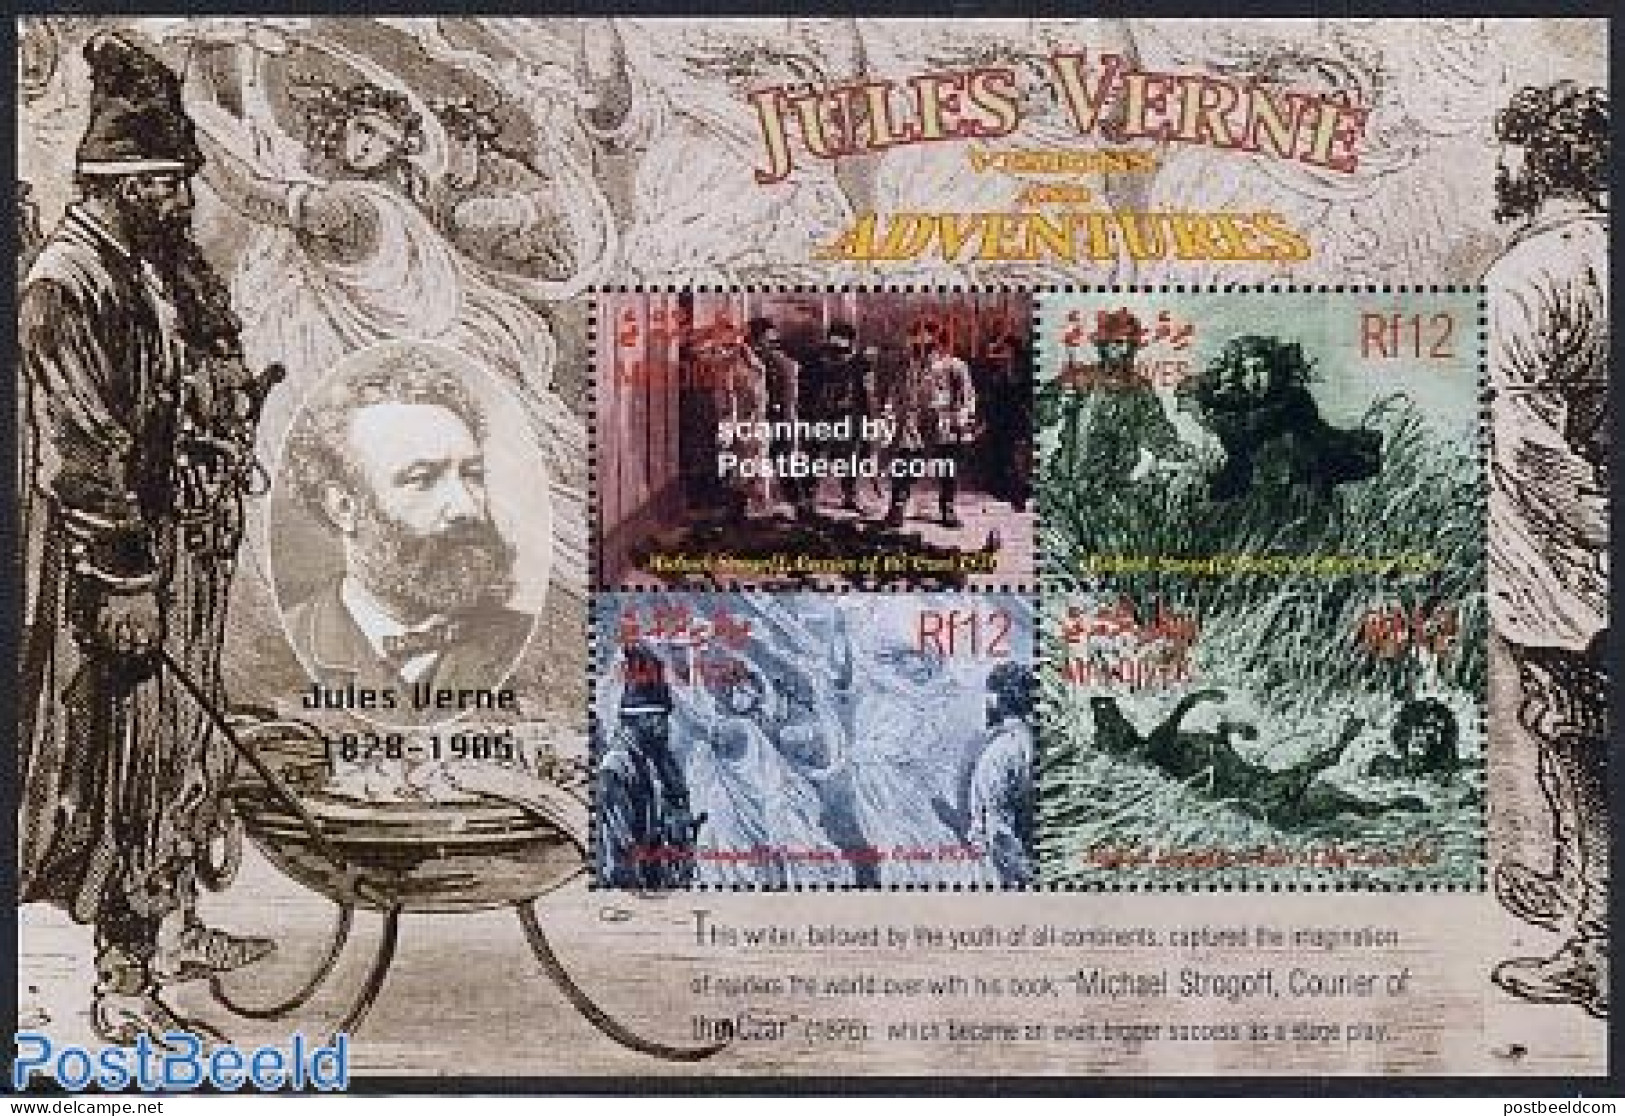 Maldives 2004 Jules Verne 4v M/s, Michael Strogoff, Mint NH, Art - Authors - Jules Verne - Science Fiction - Writers